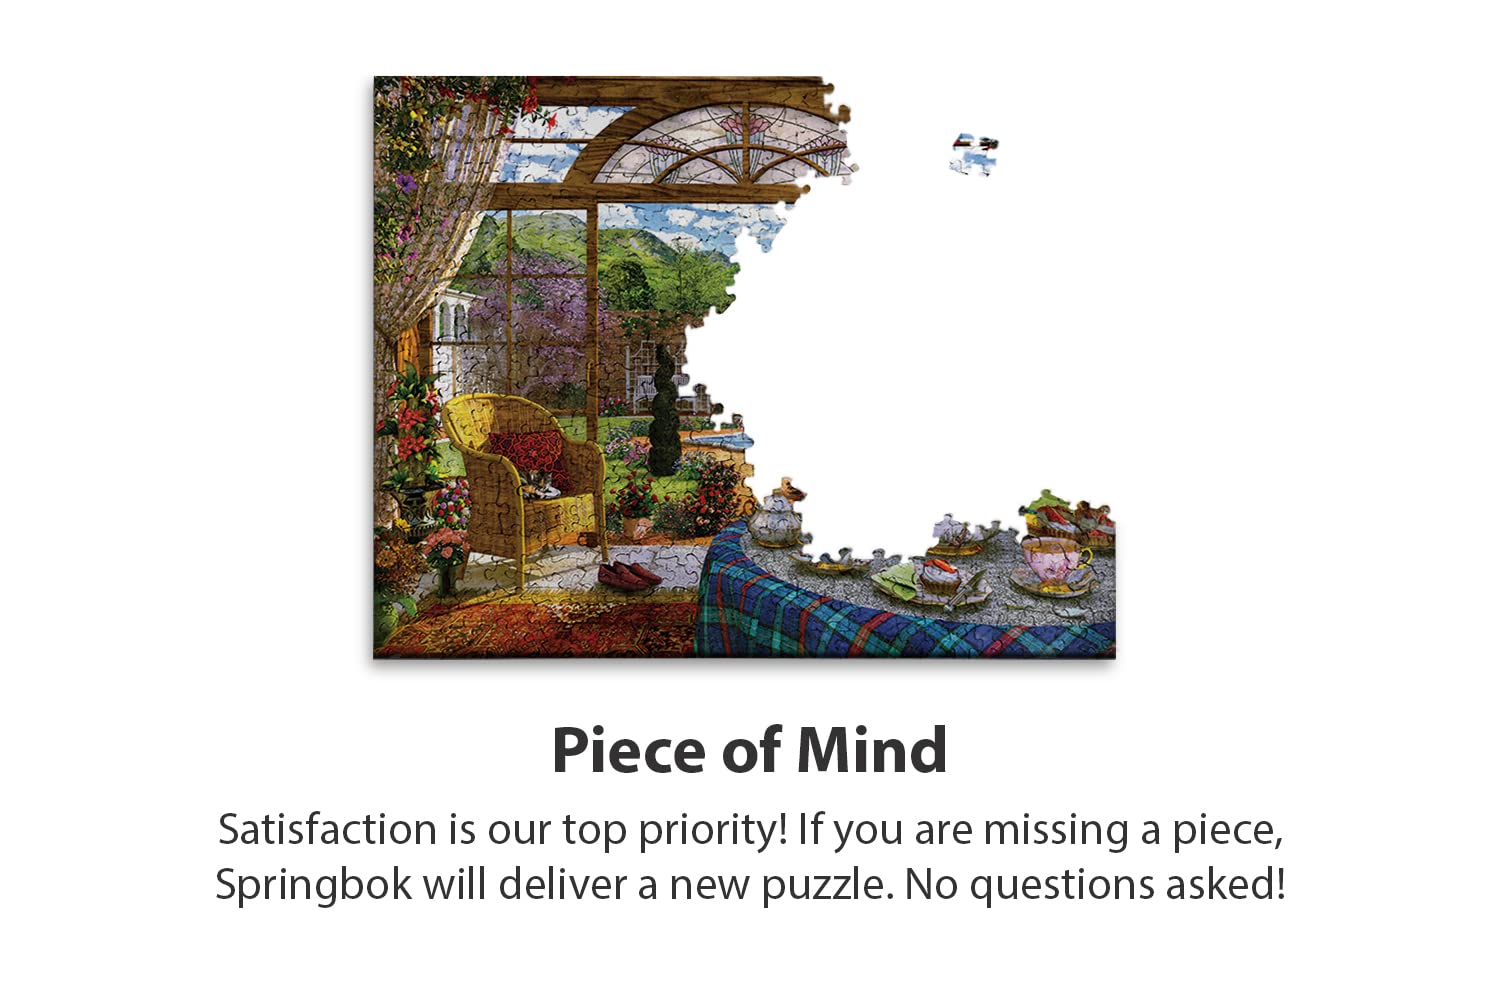 Springbok's 1000 Piece Jigsaw Puzzle The Conservatory, Multi